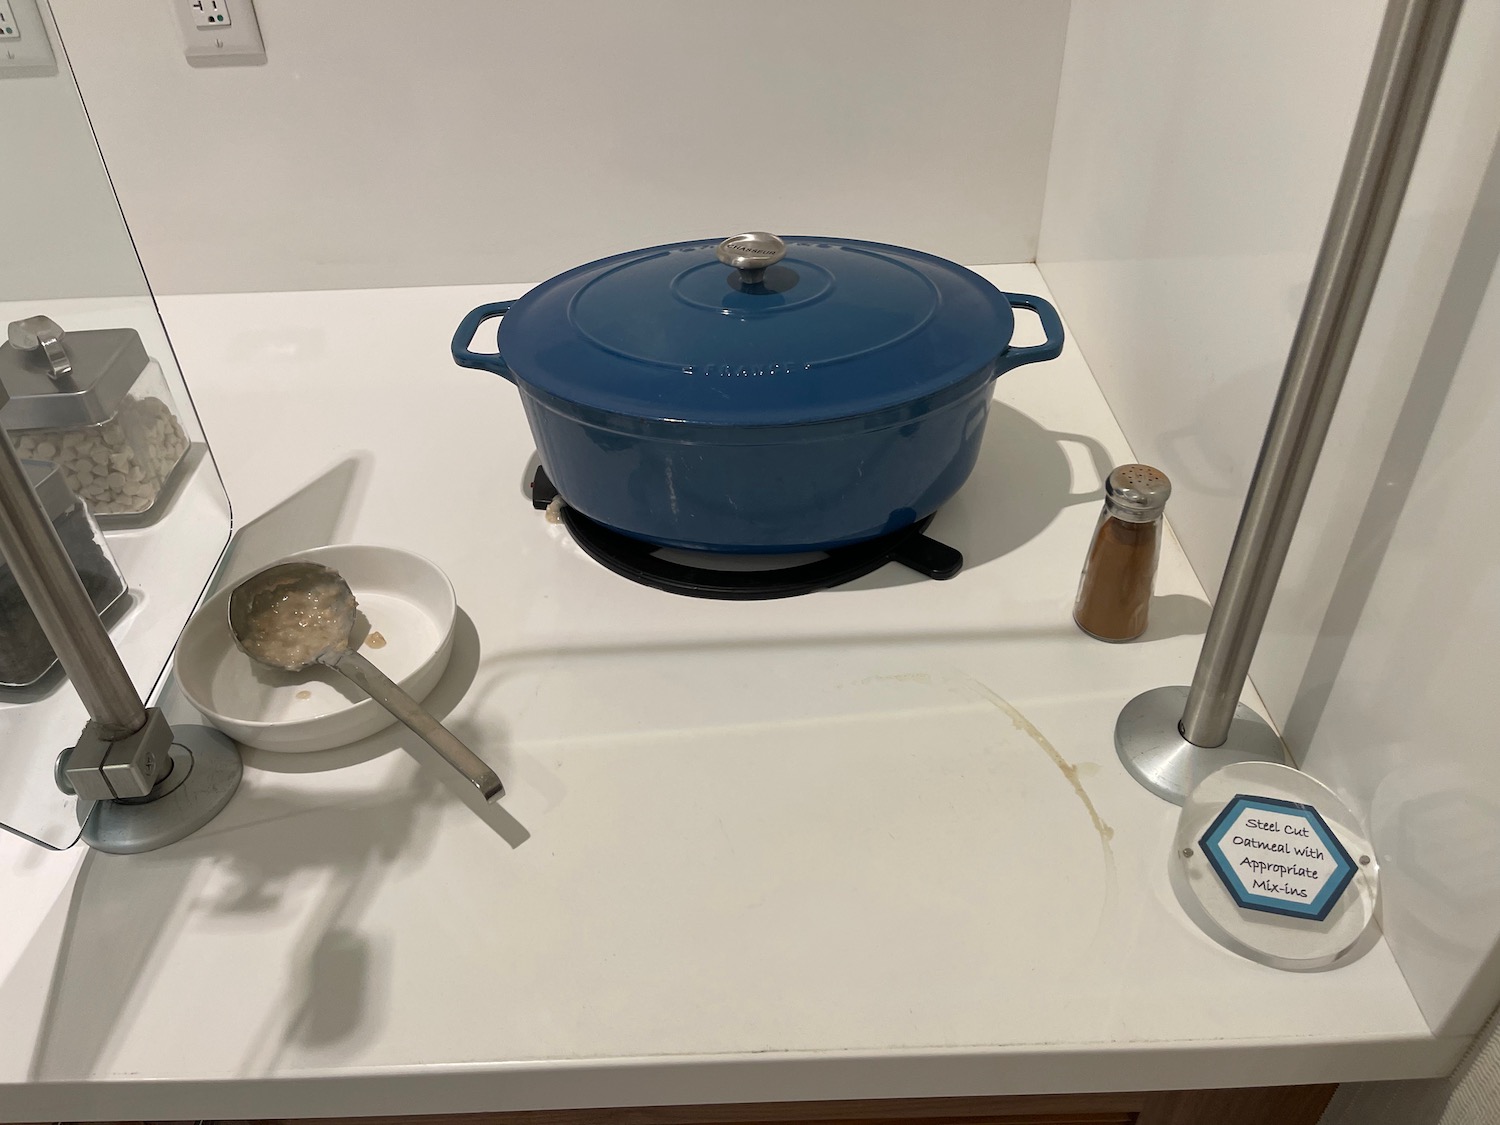 a blue pot on a stove